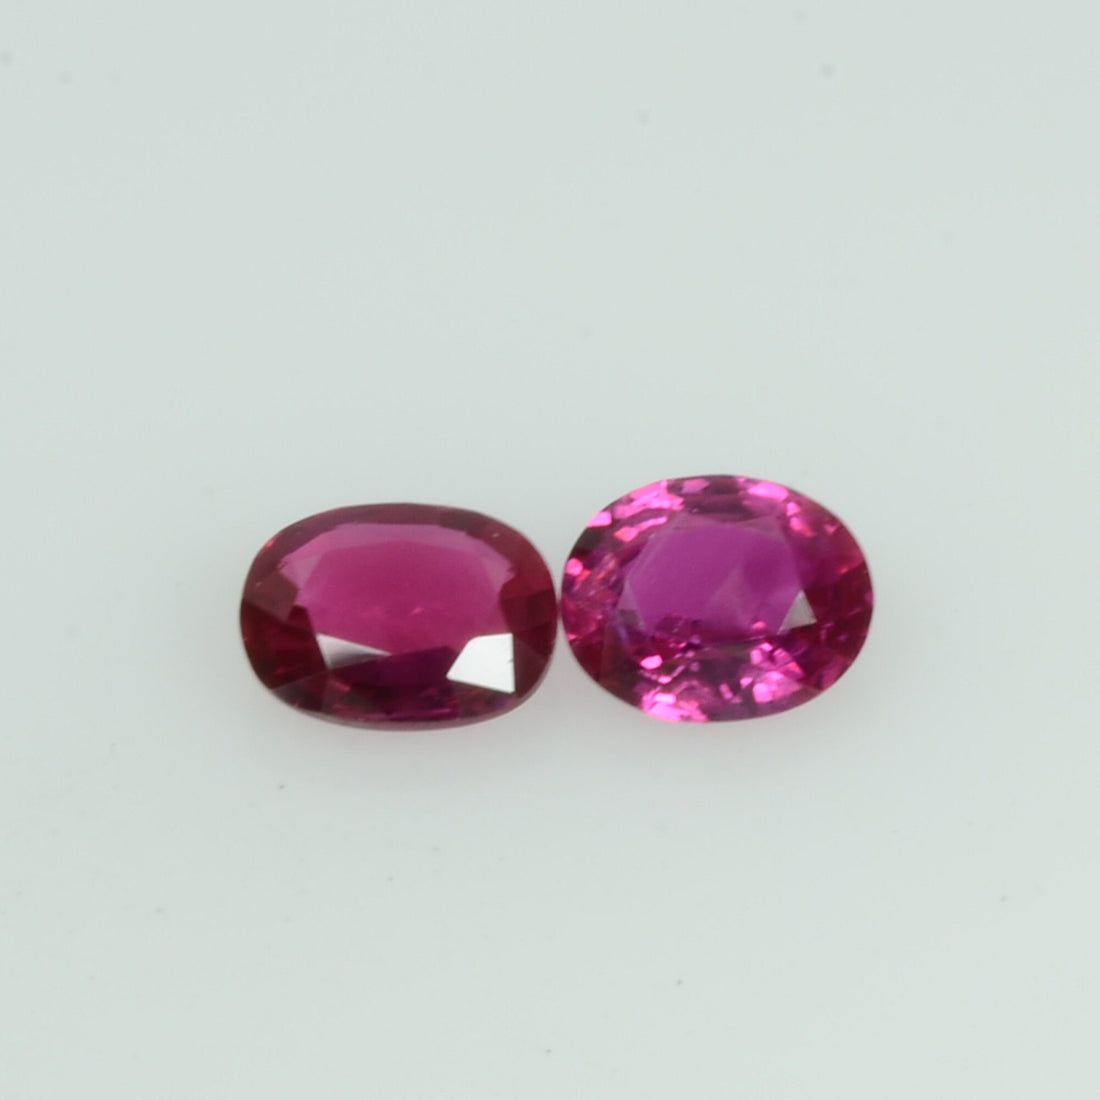 4x3 mm Natural Burma Ruby Loose Gemstone Oval Cut